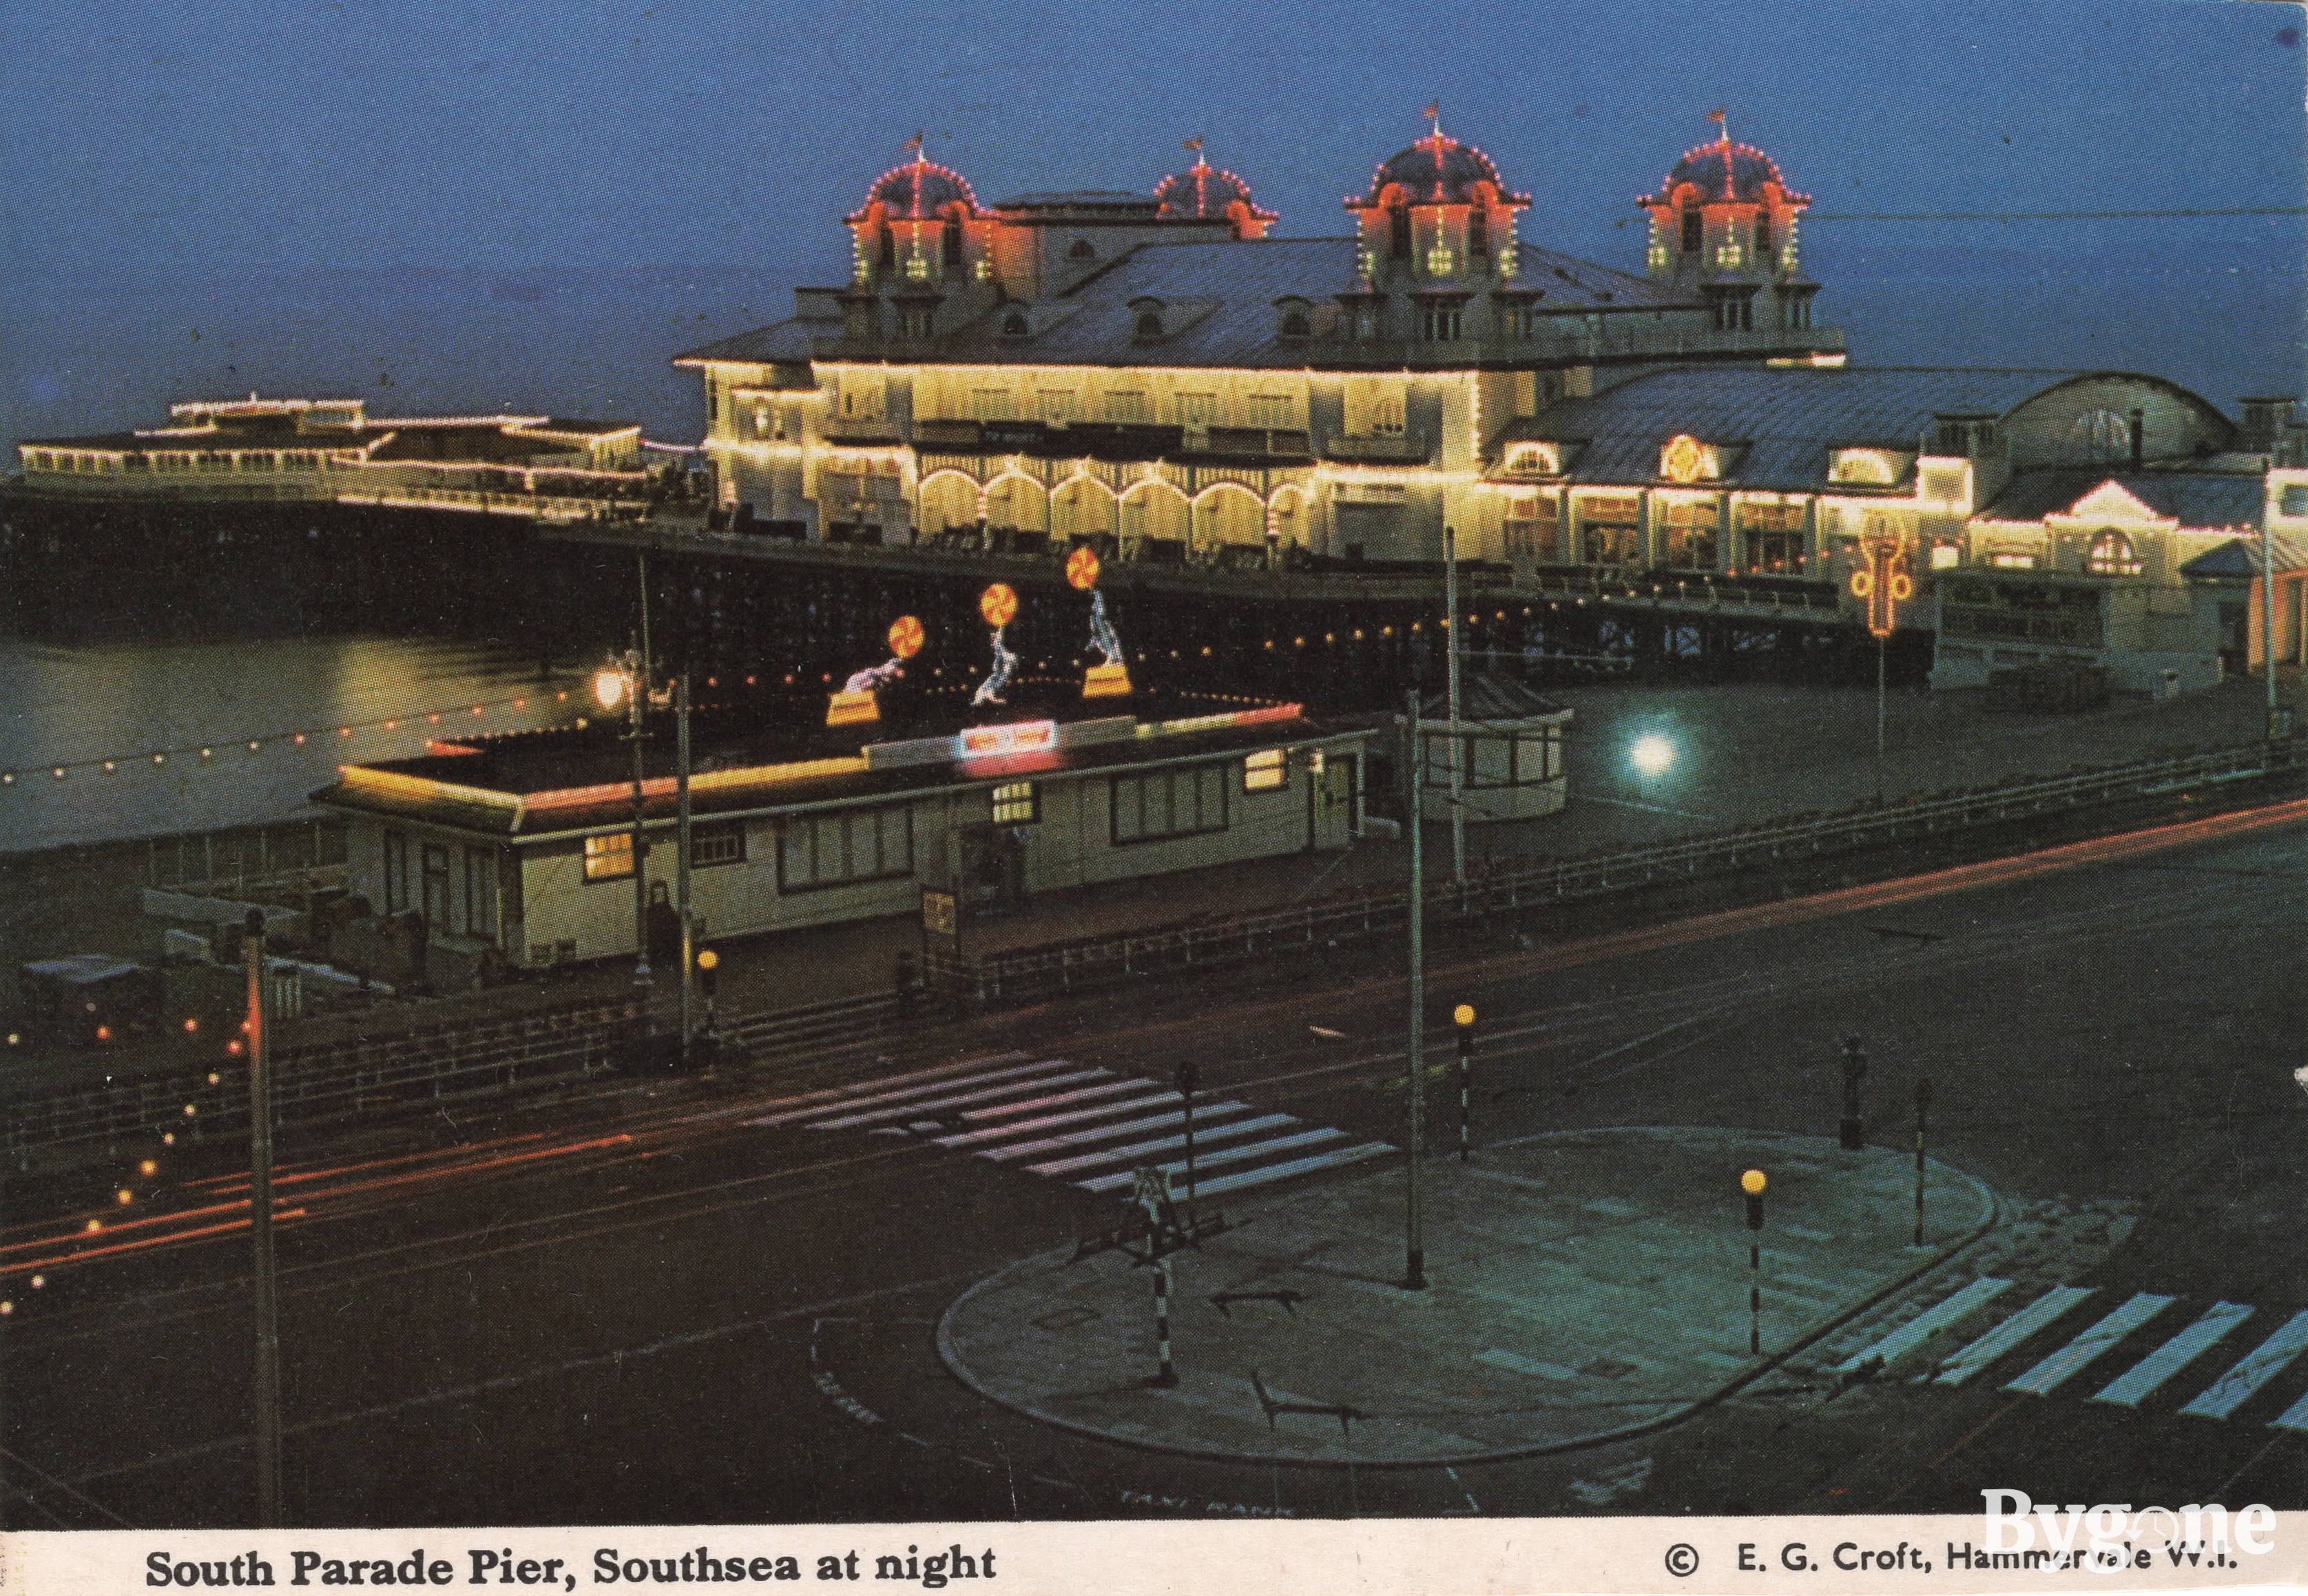 South Parade Pier, Southsea at night